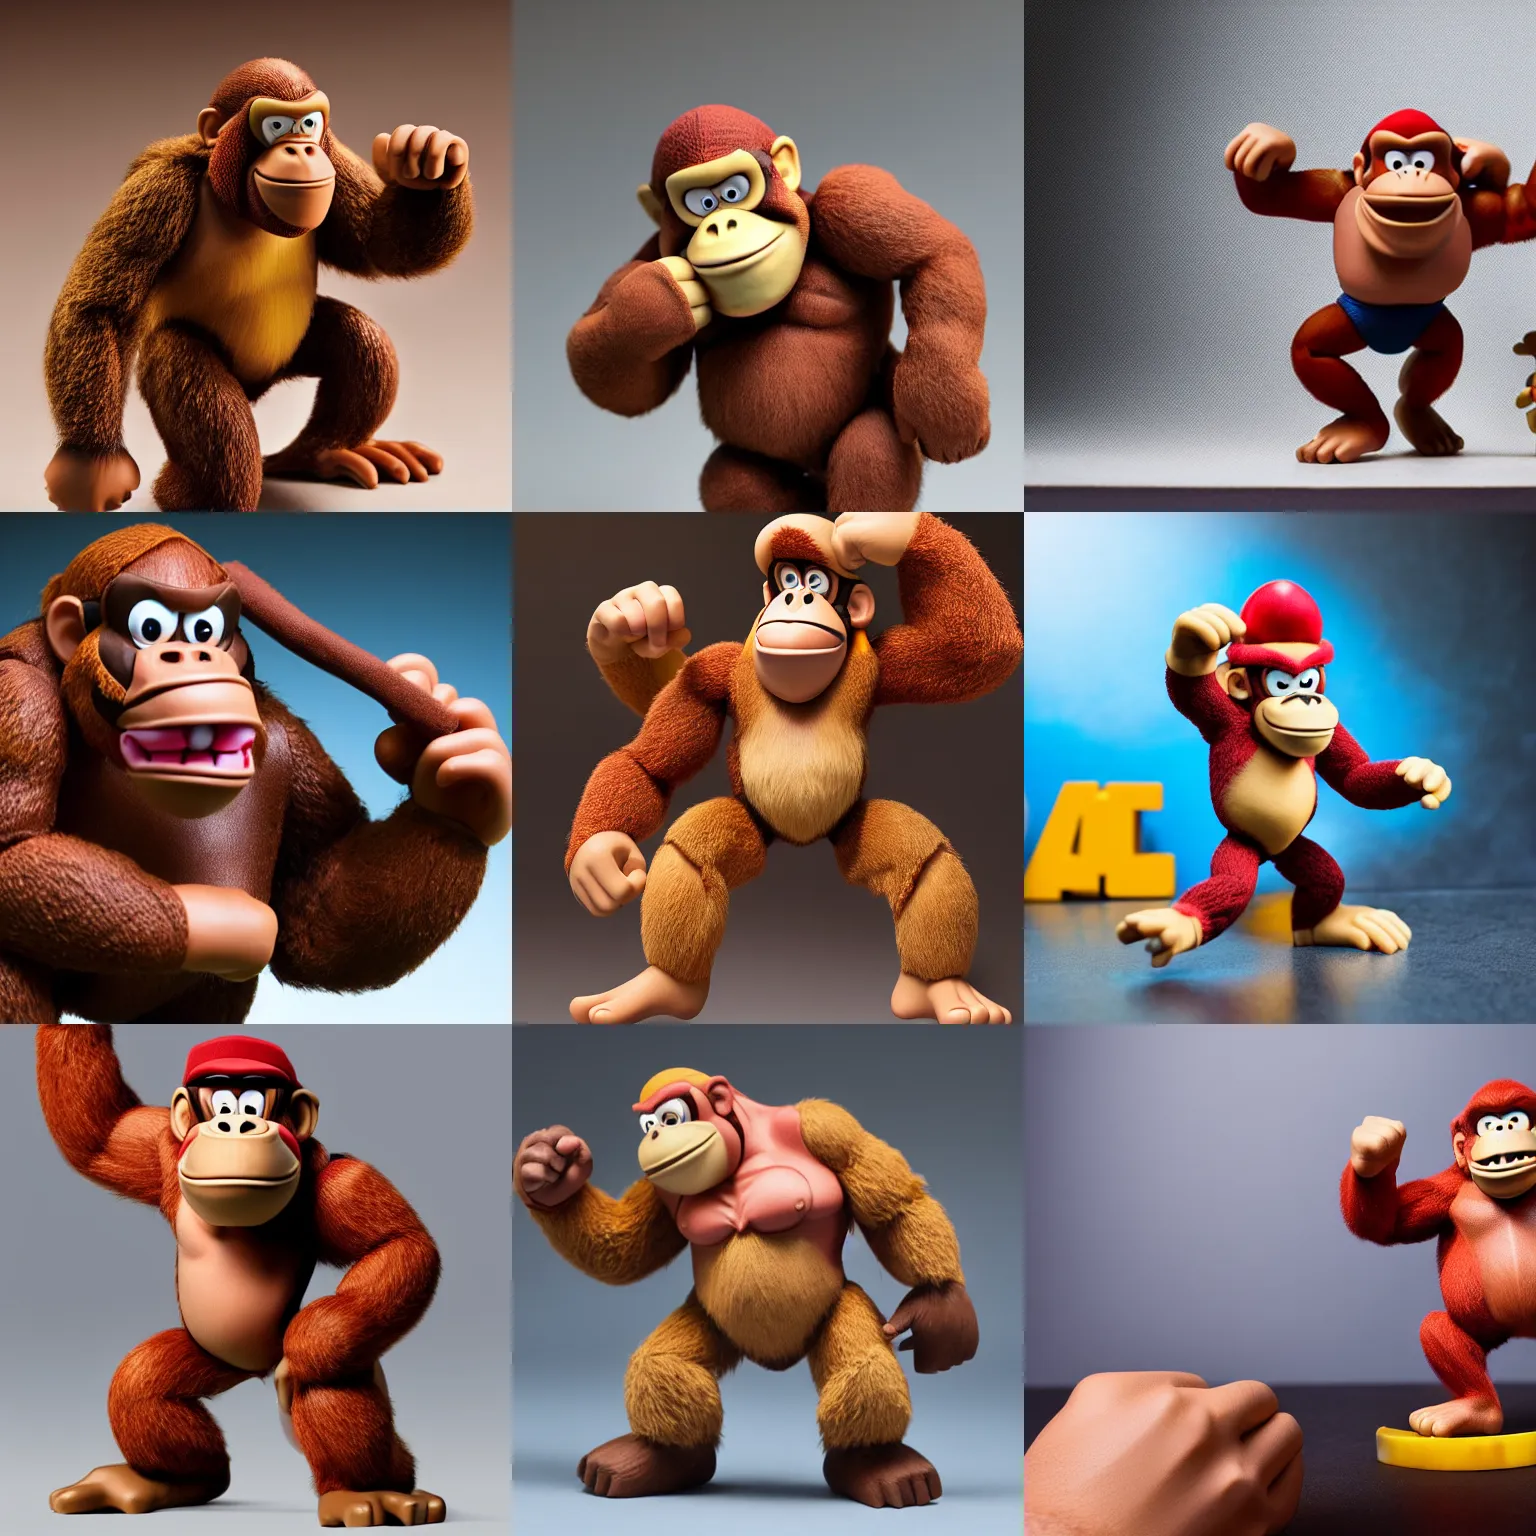 Prompt: Donkey Kong action figure, 4k product shot, studio lighting